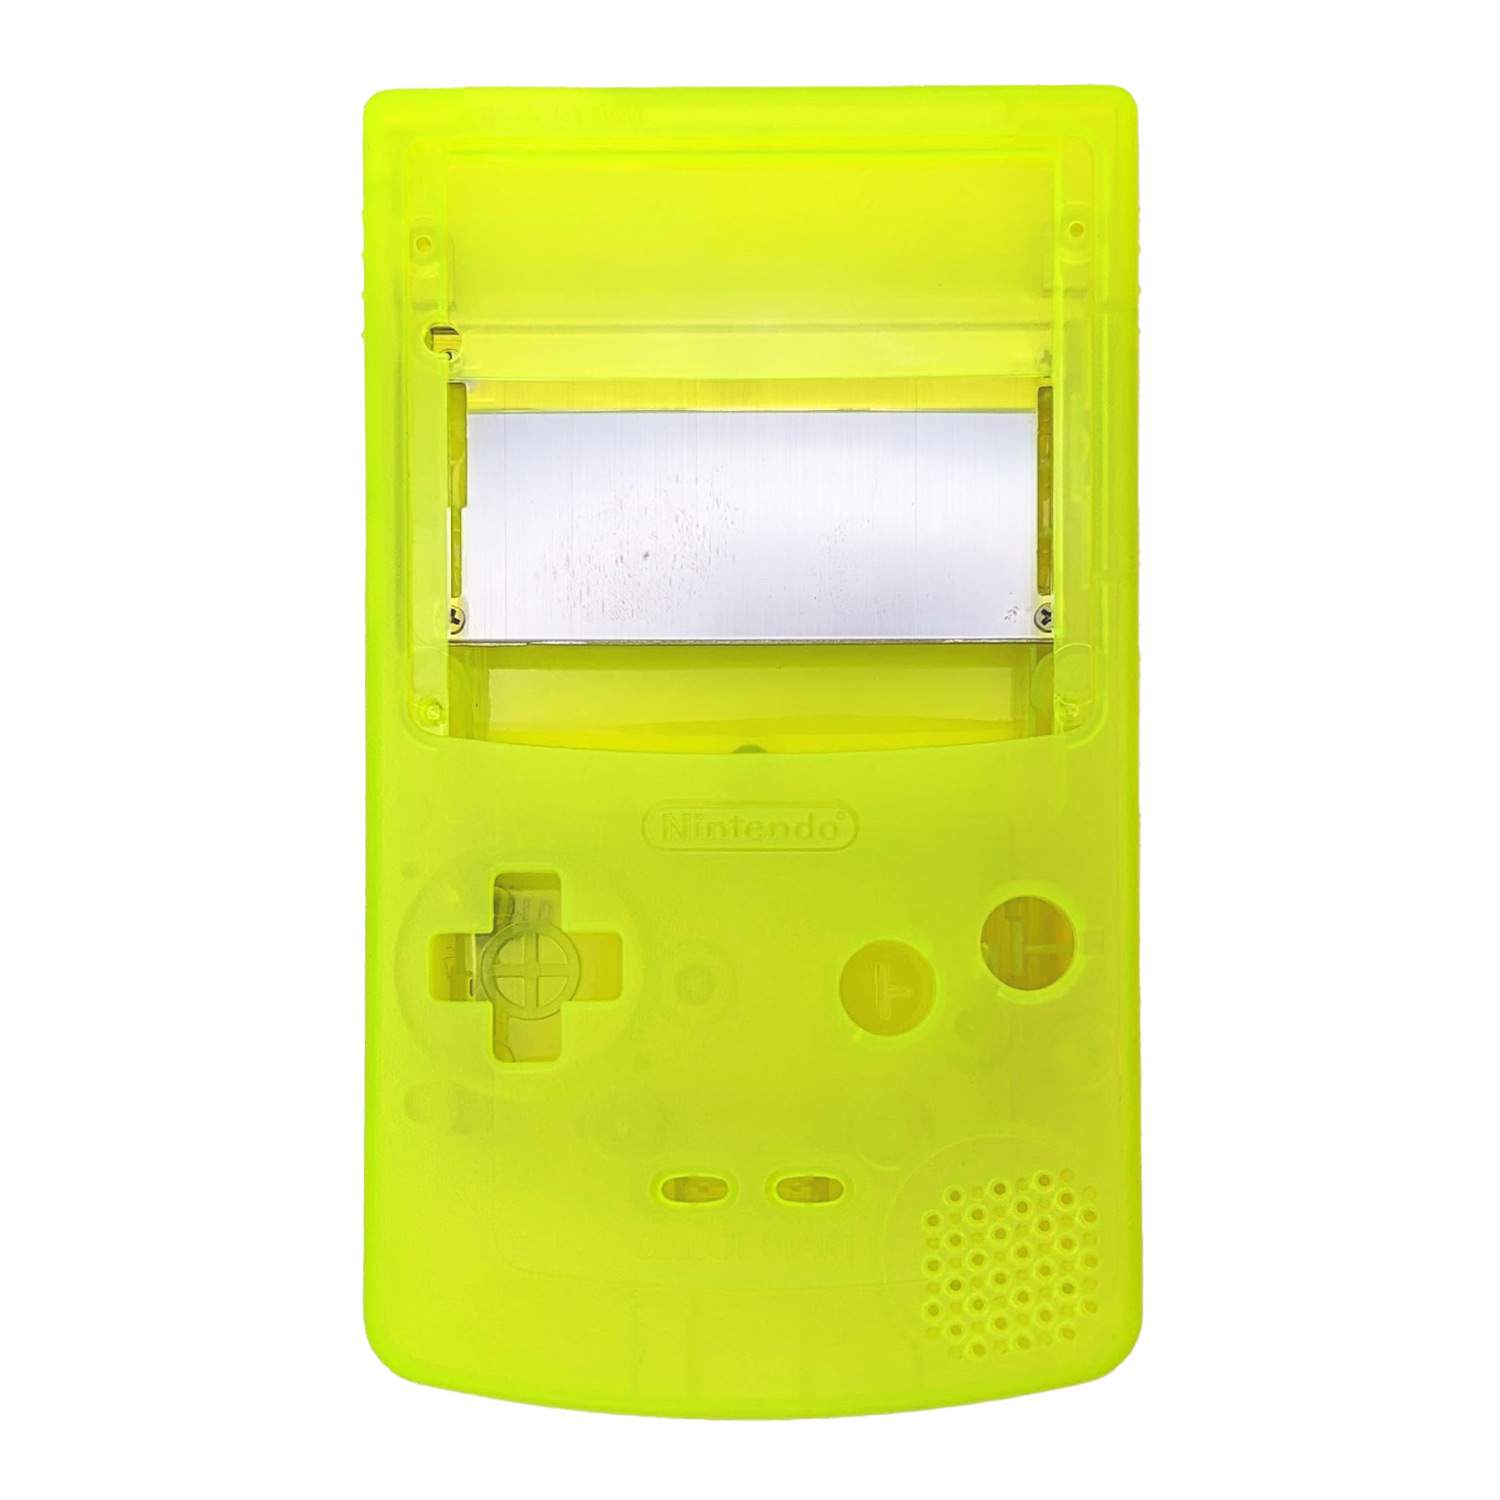 Game Boy kleur etui (Citroen transparant)